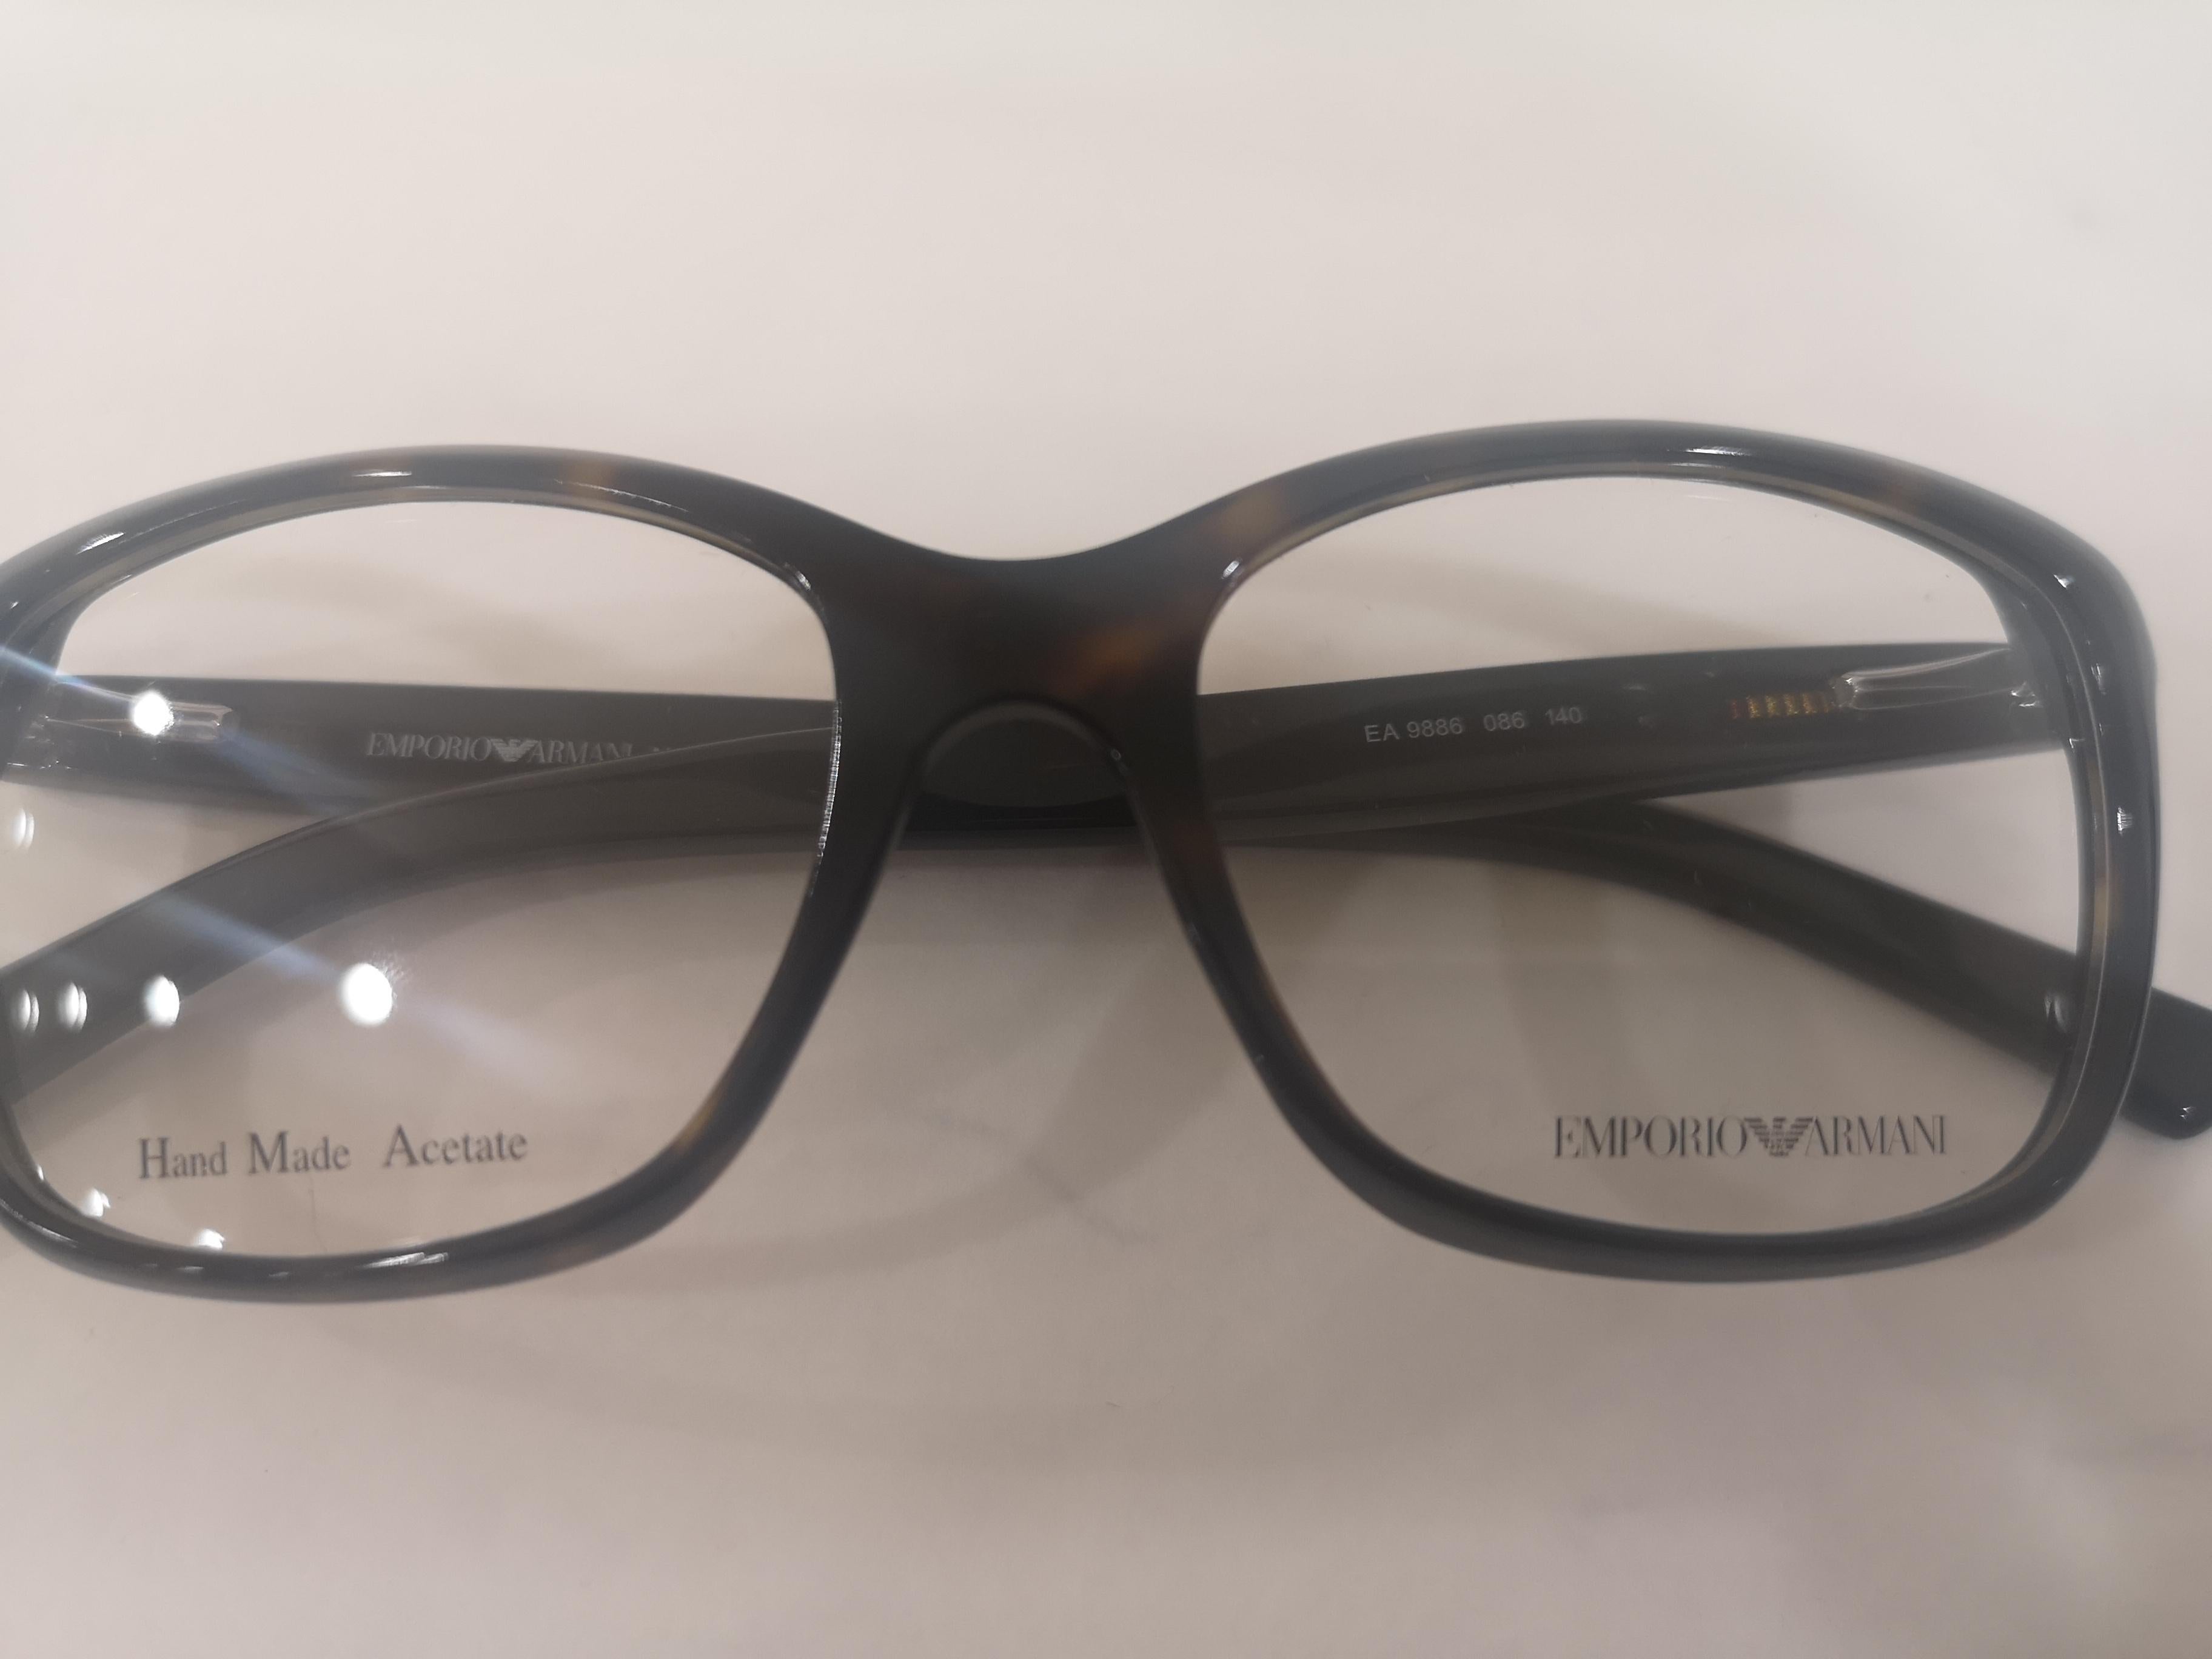 Emporio Armani Tortoise Frame / Eyewear NWOT 4